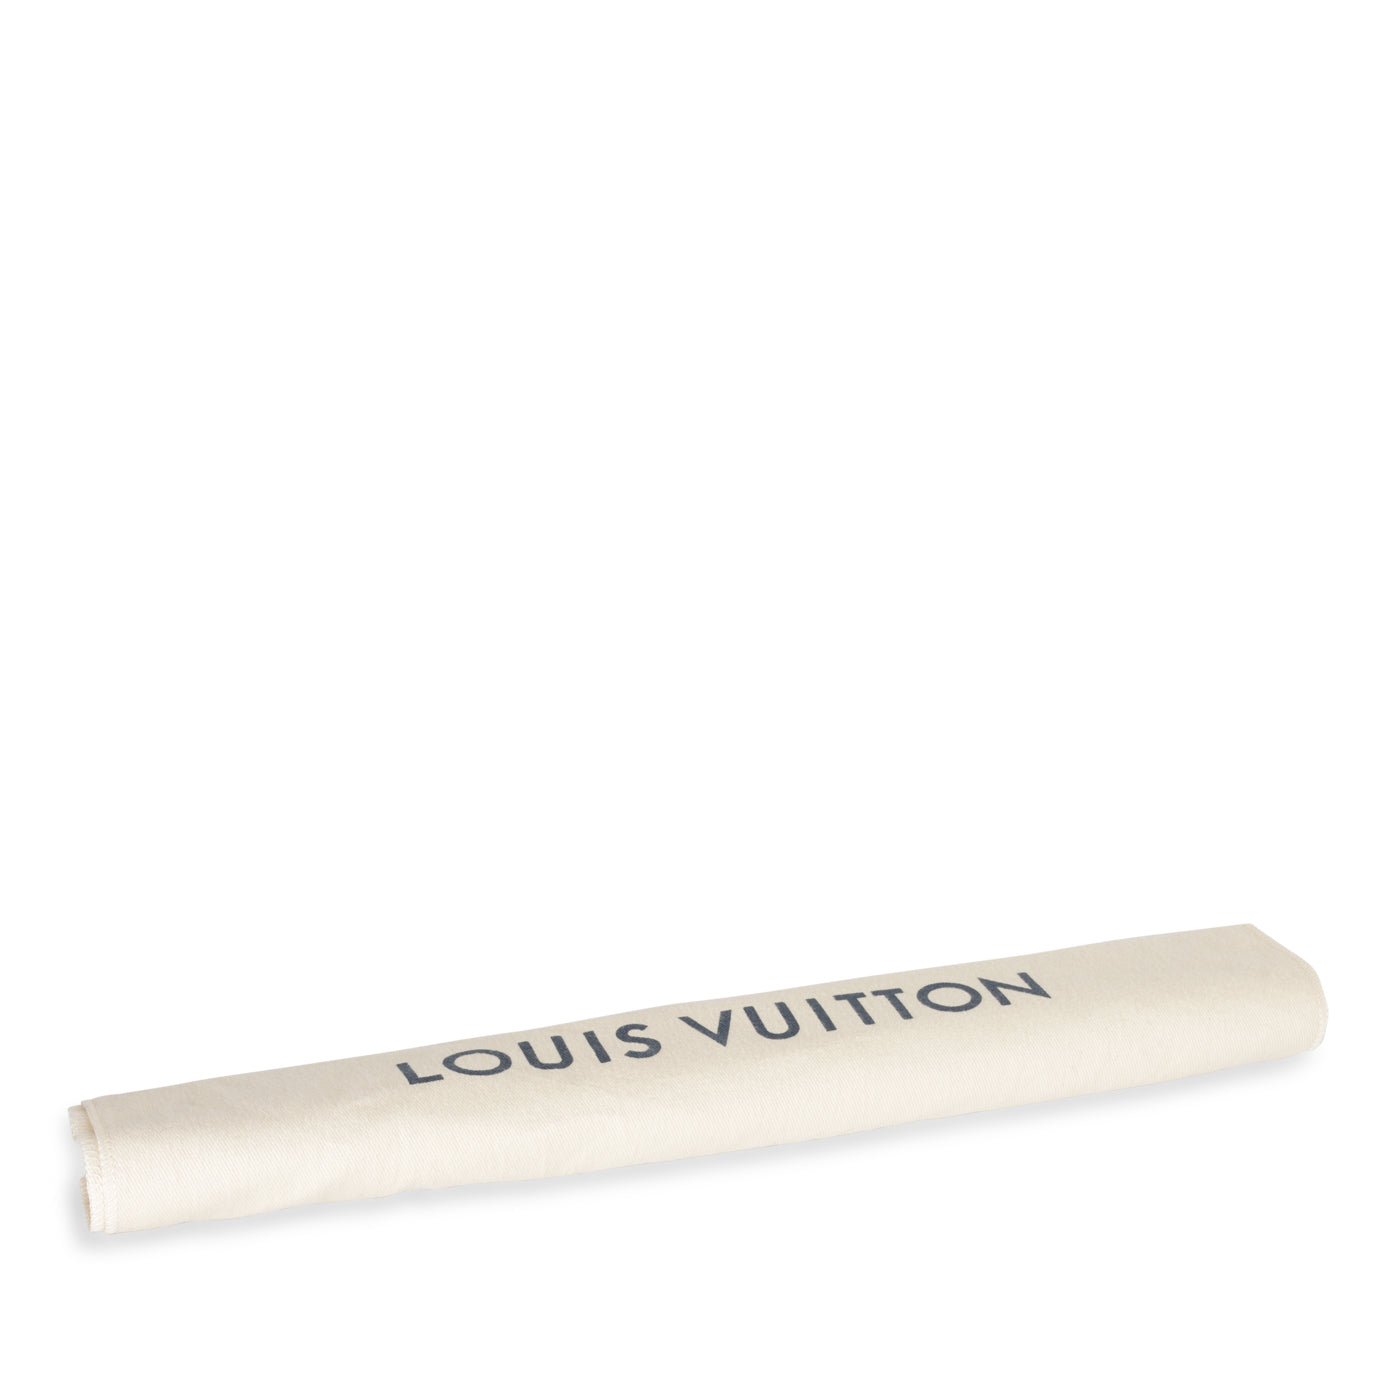 Shop Louis Vuitton 3 watch case (M43385, M47530, N41137) by peaceworld49